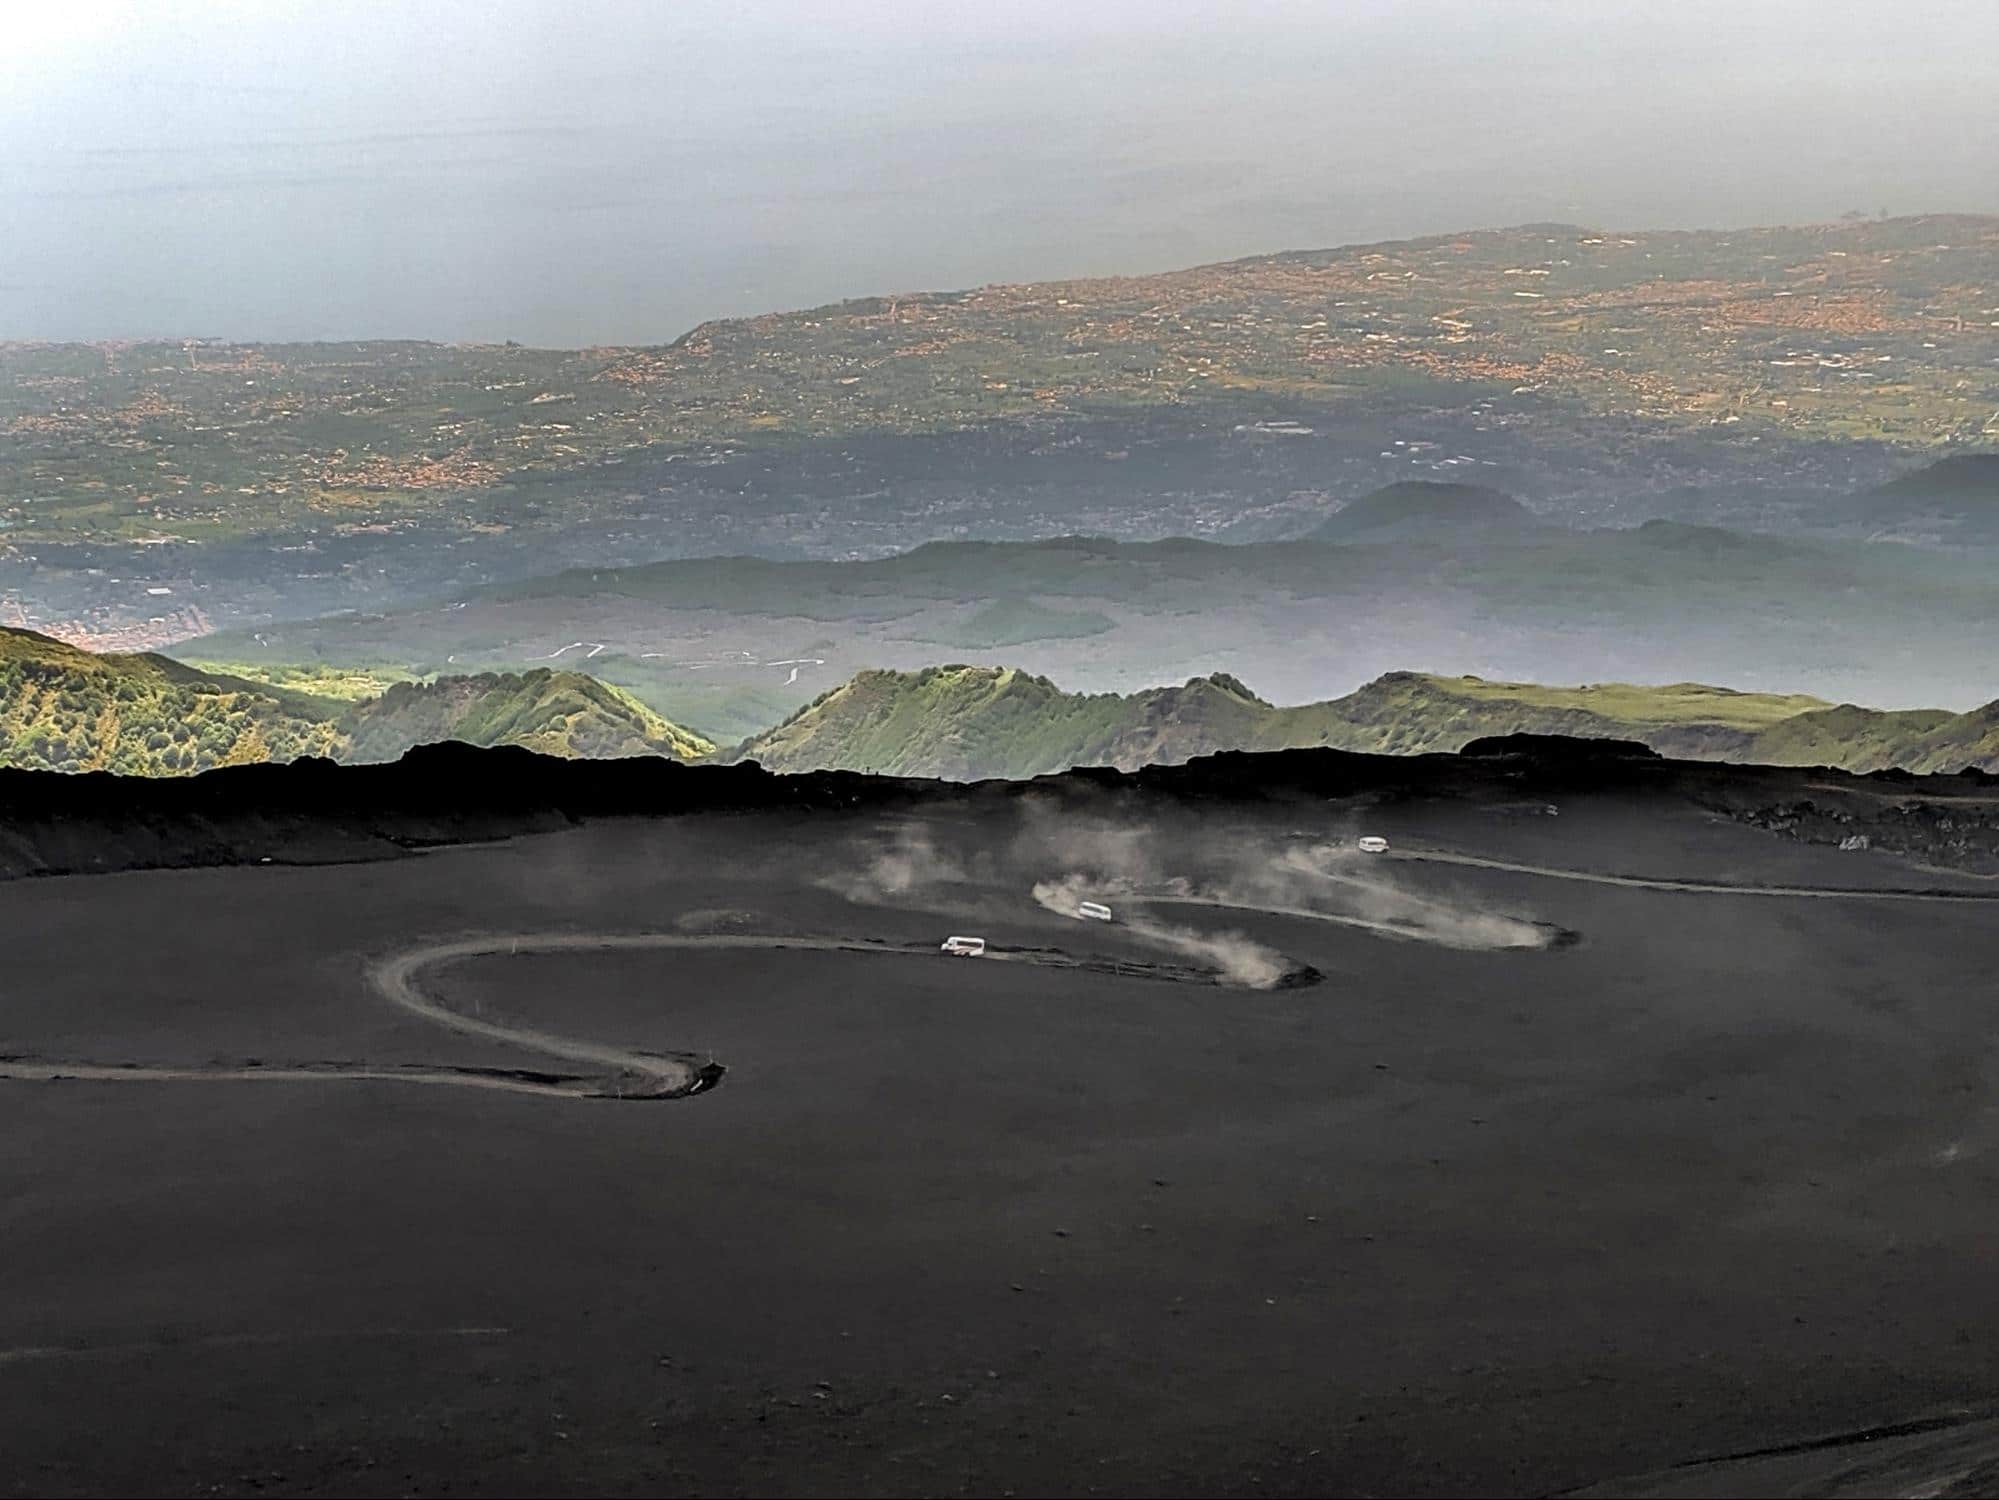 Driving up Mount Etna